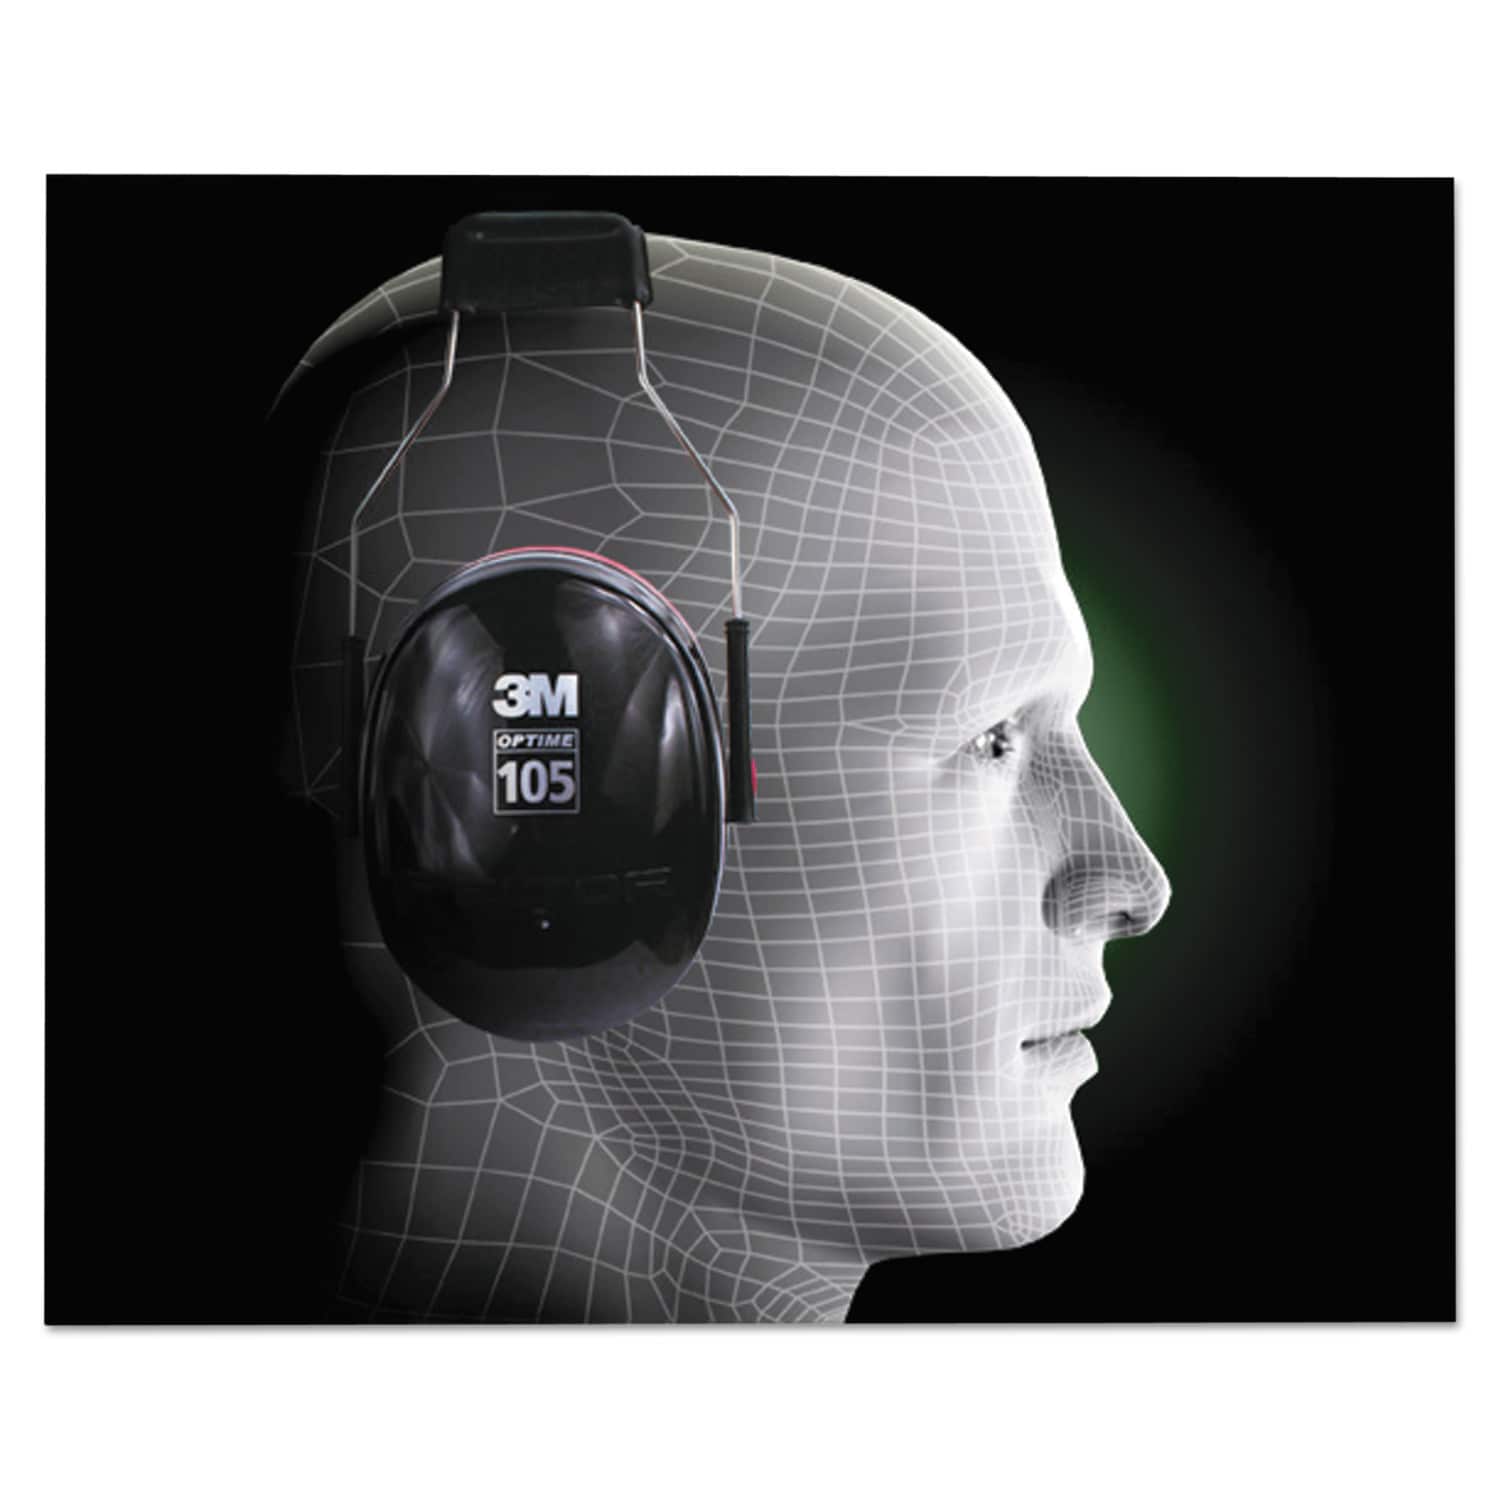 3M™ PELTOR X5 Earmuffs, Over-The-Head, NRR 31 dB